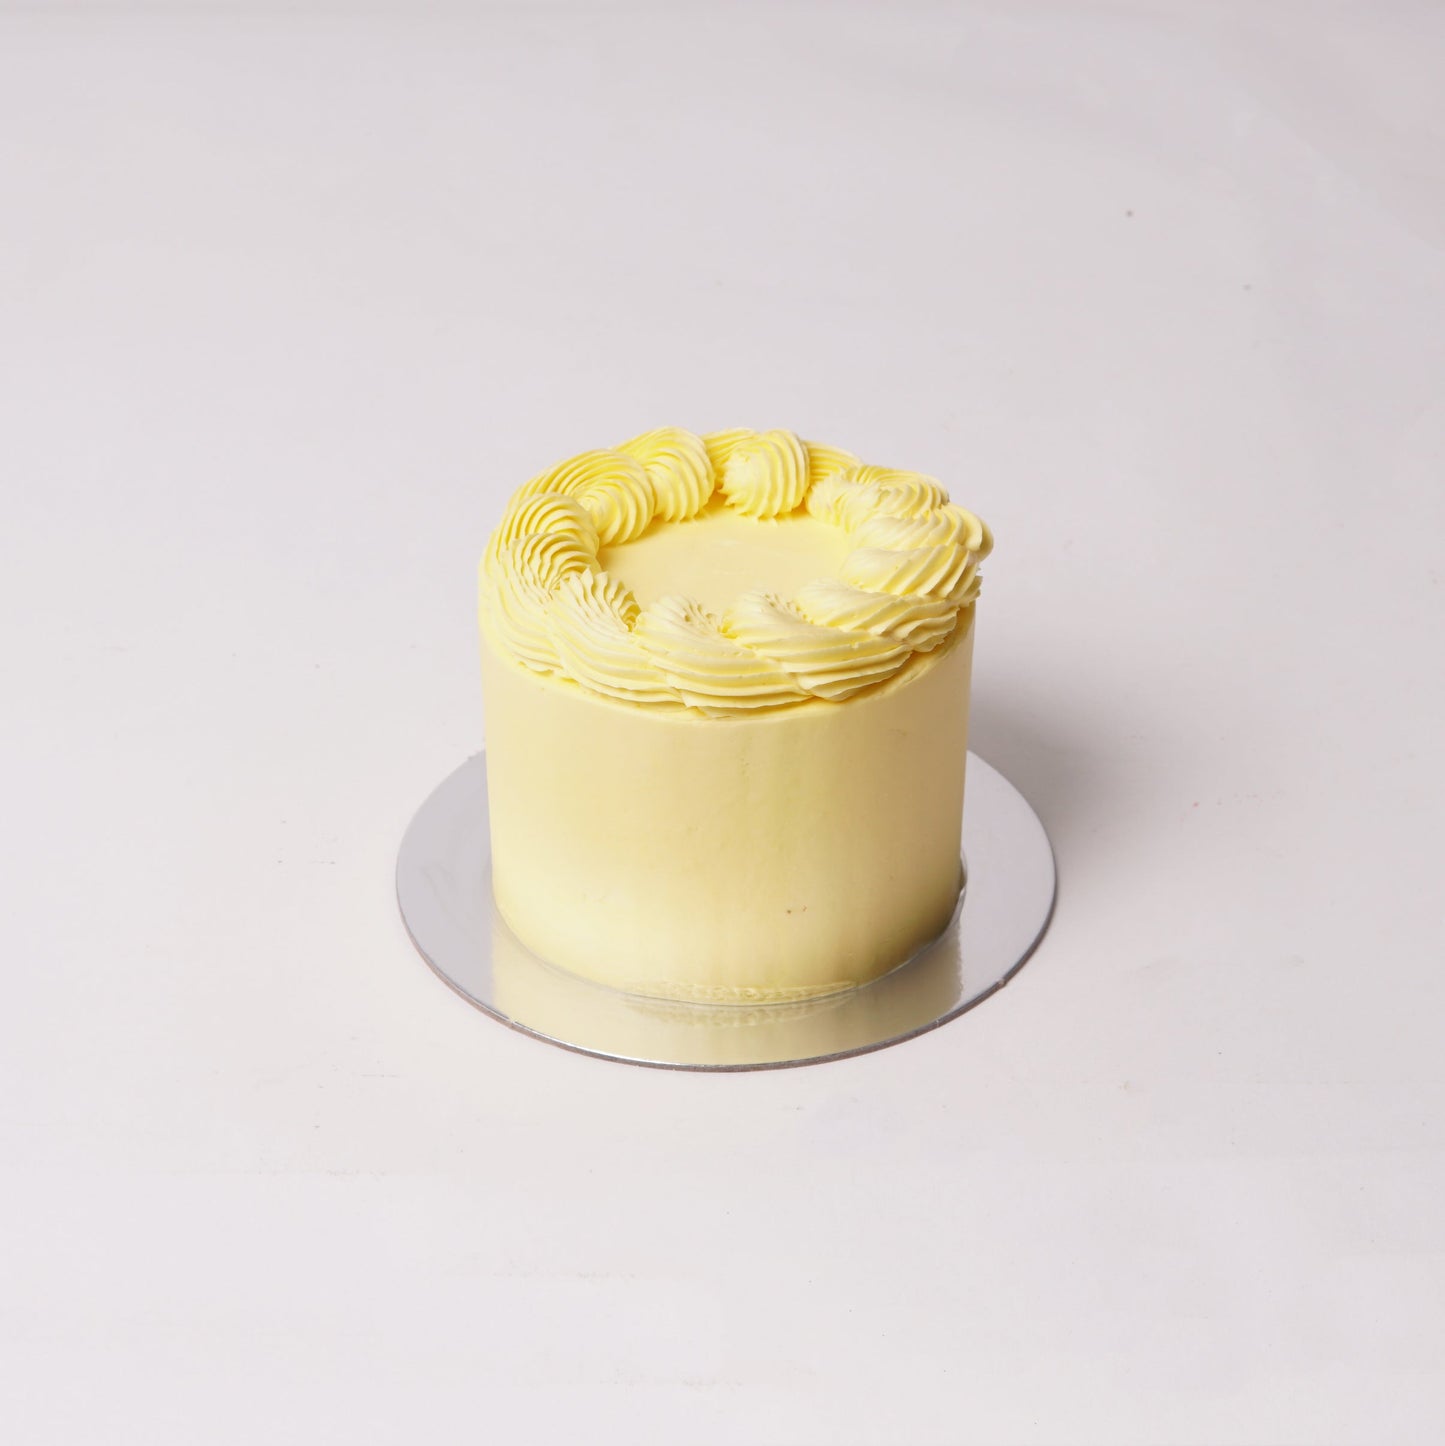 TOMORROW - Pastel Yellow Minimal Cake